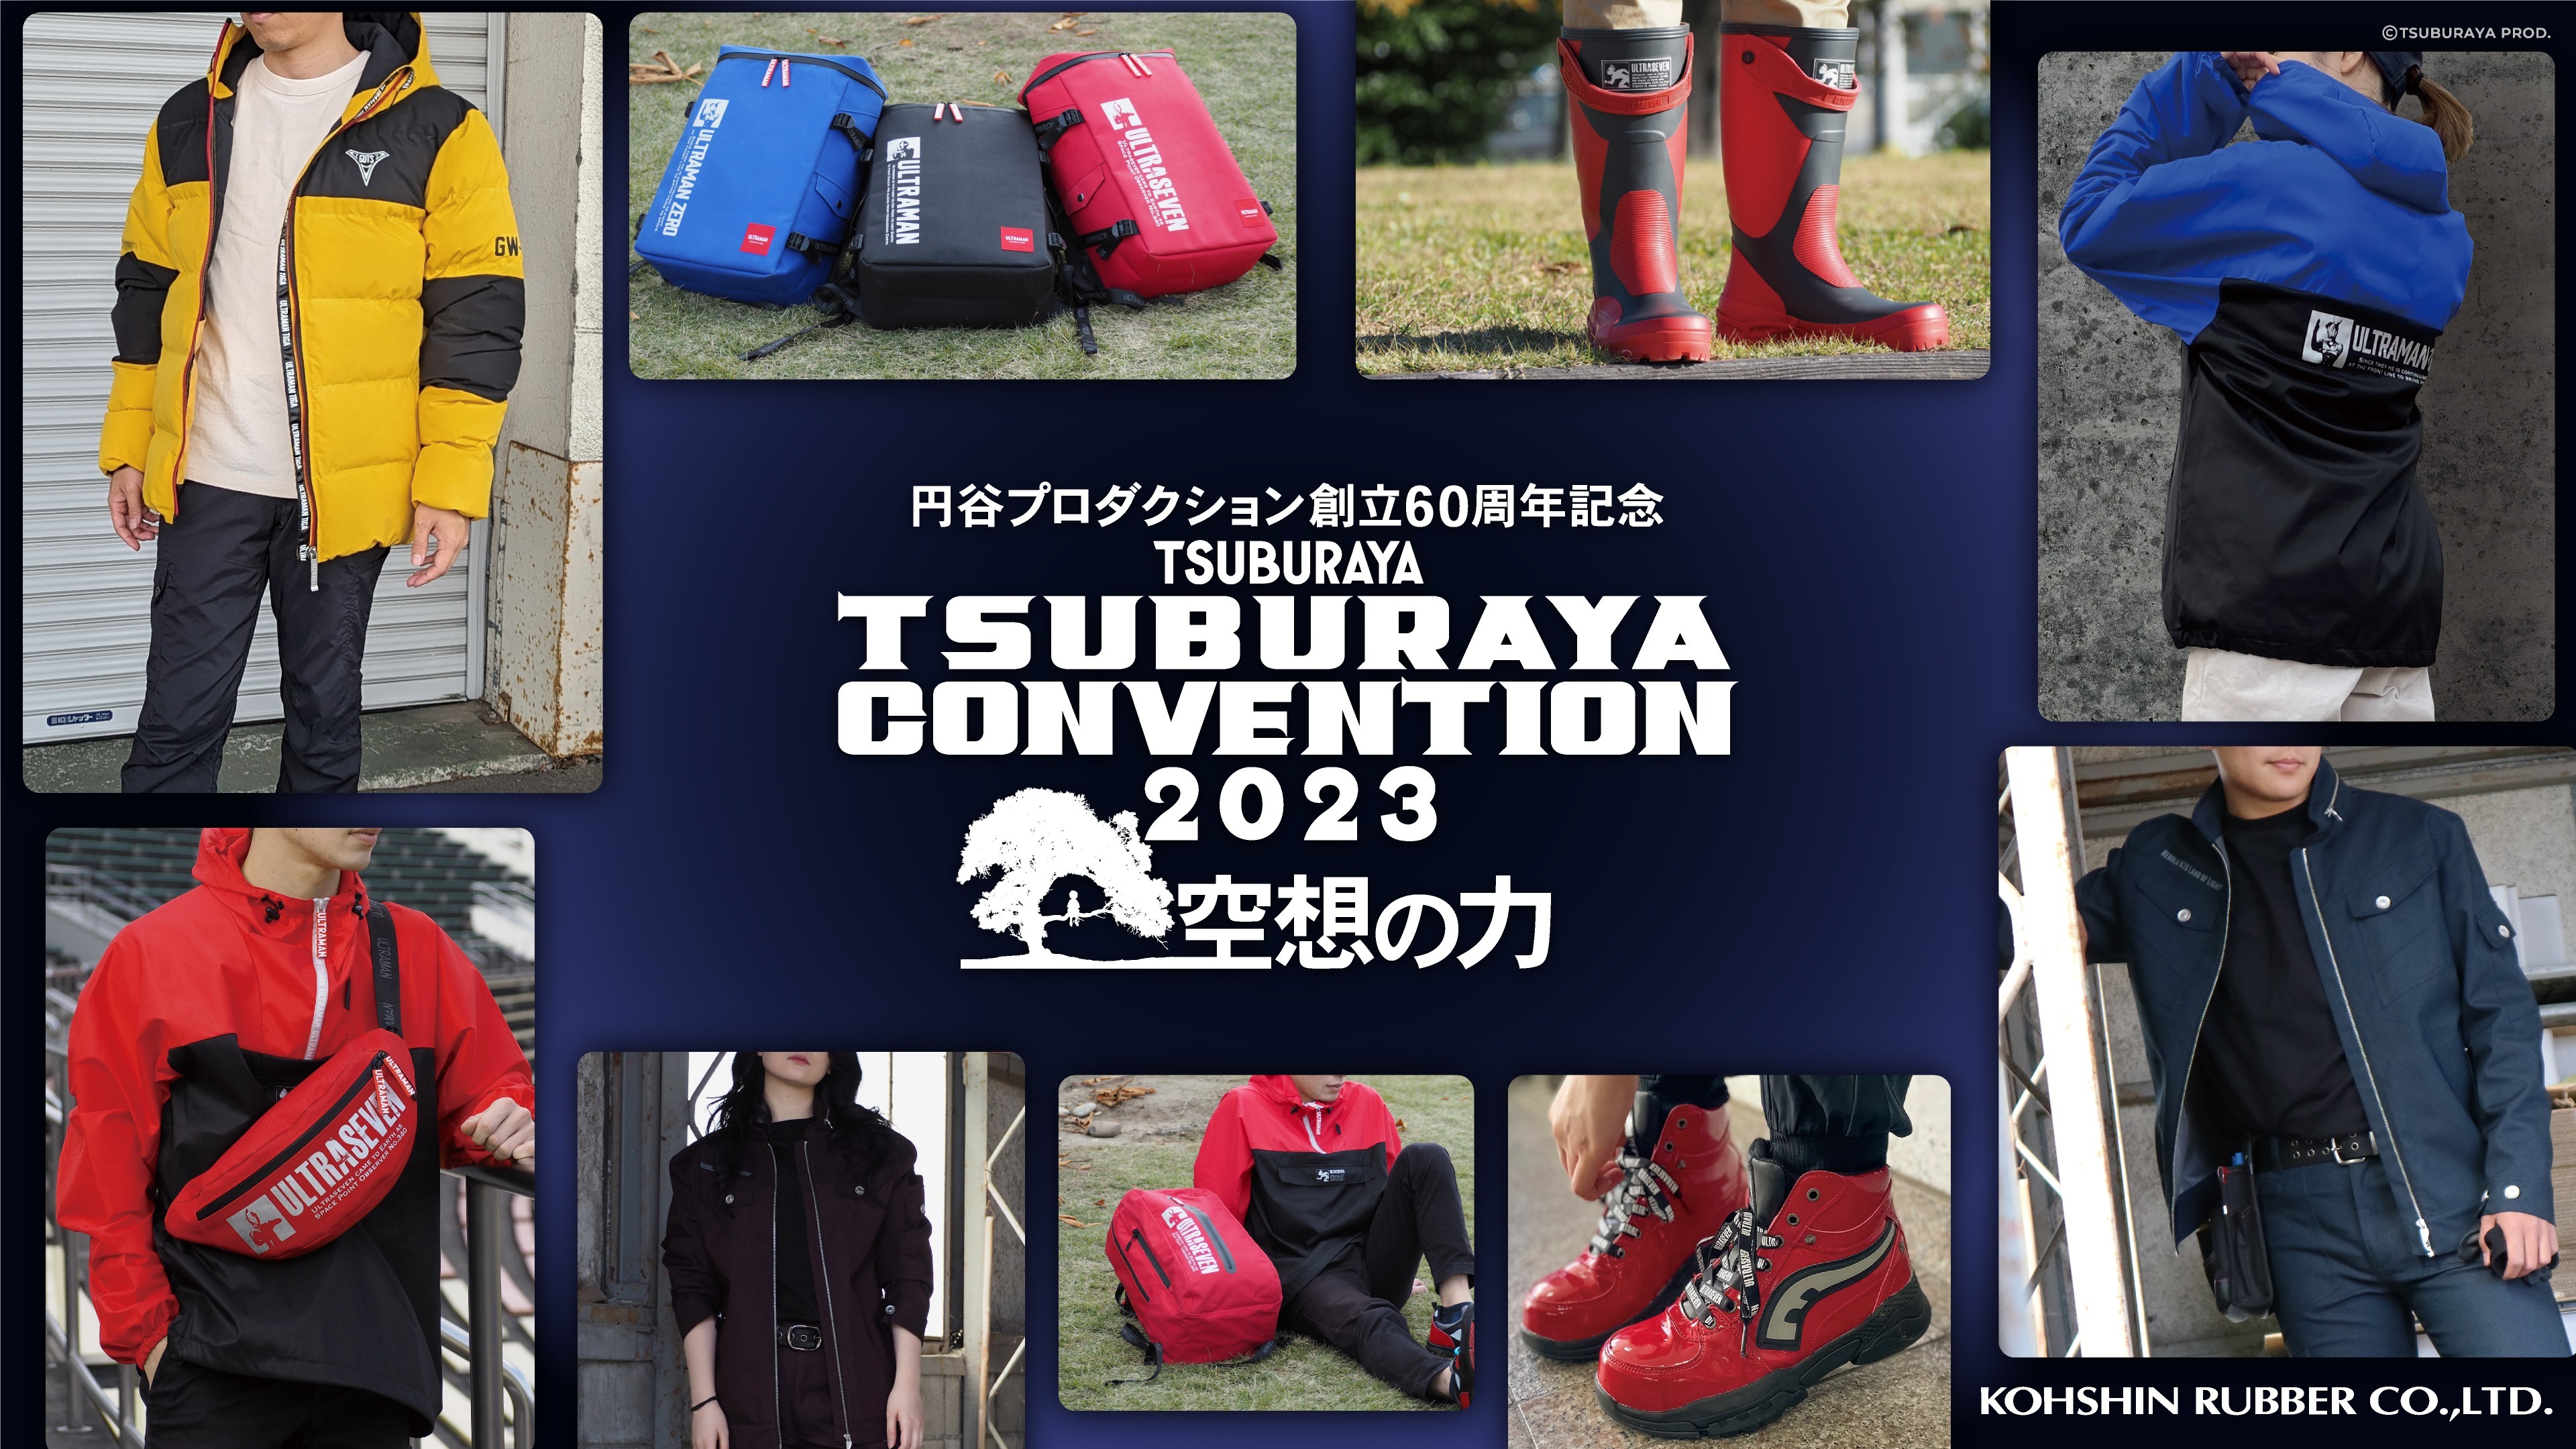 「TSUBURAYA CONVENTION 2023」のコレクションゾーンに
弘進ゴム株式会社が出展いたします！